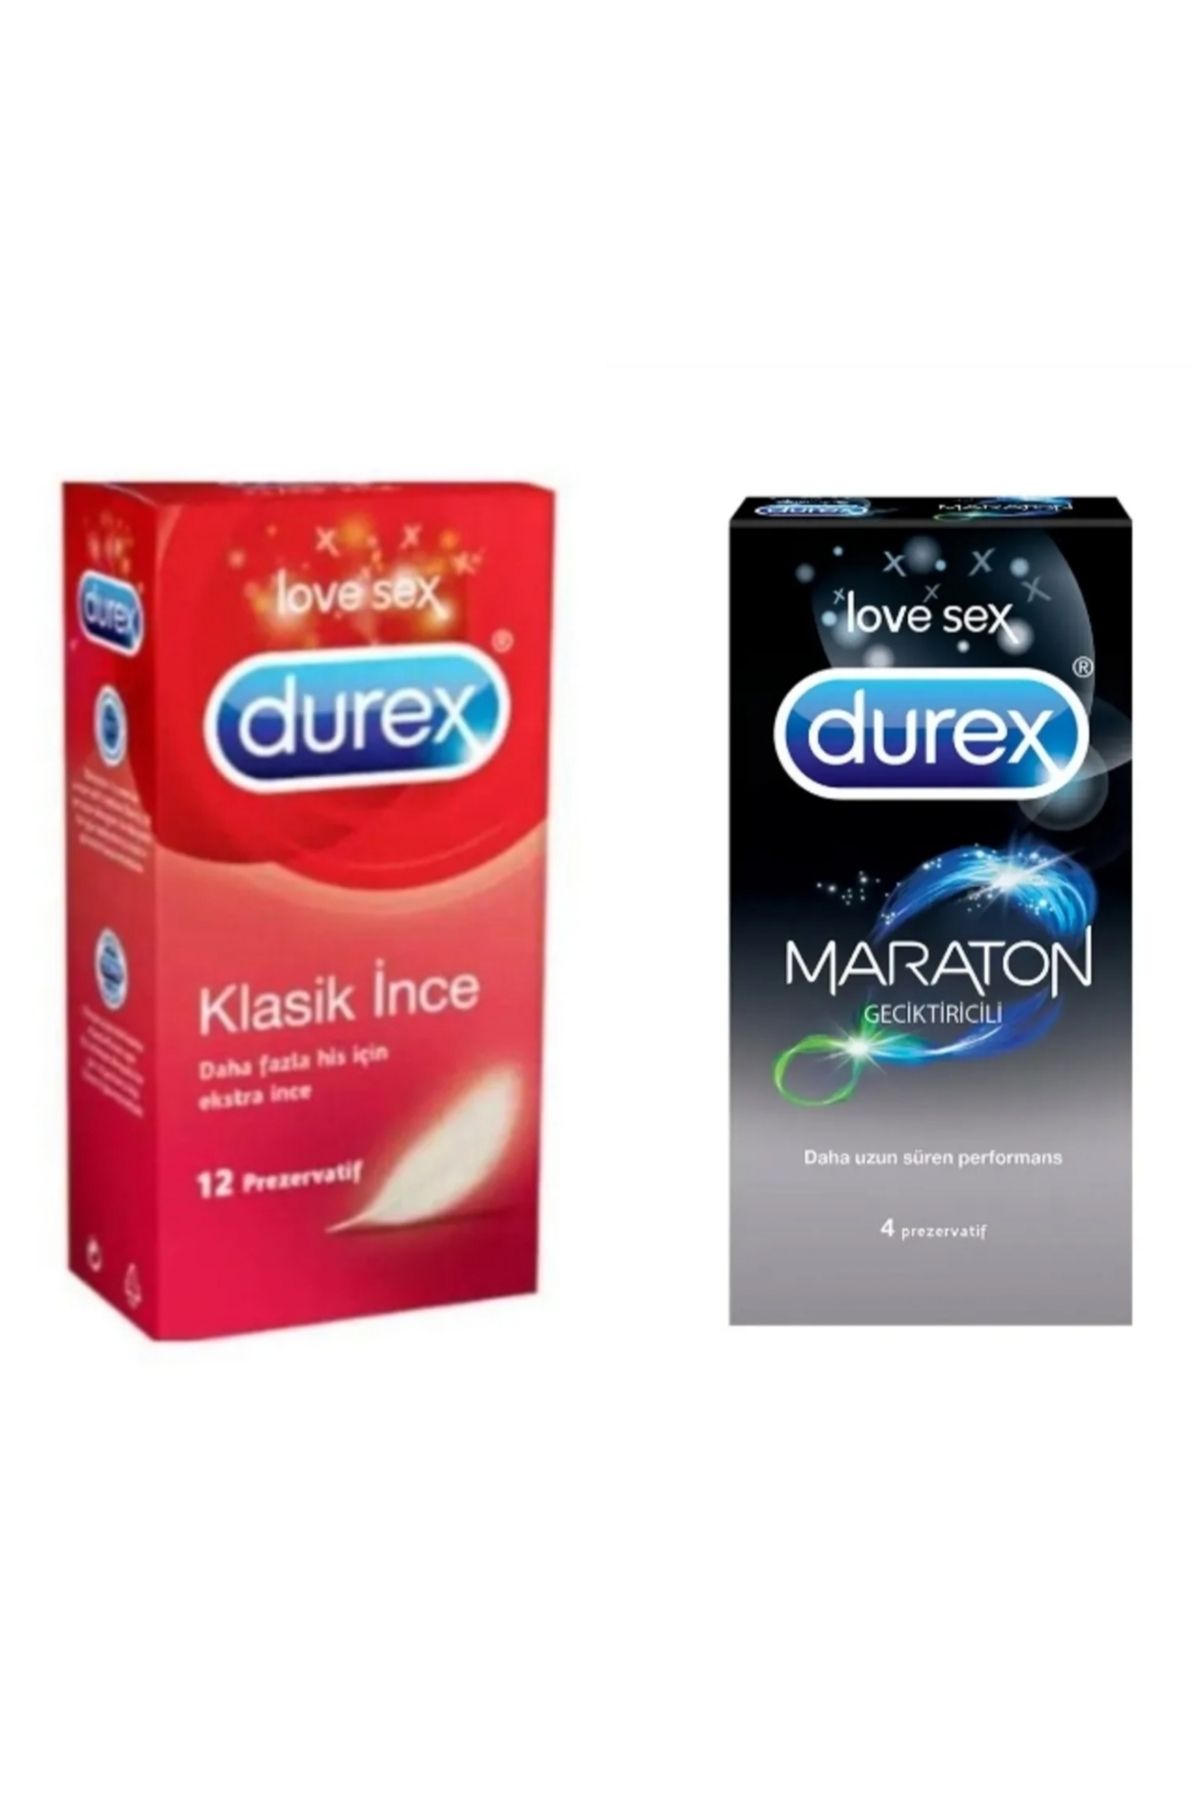 Durex prezervatif daha fazla his daha fazla saat muhteşem 2 lı 16 lı paket